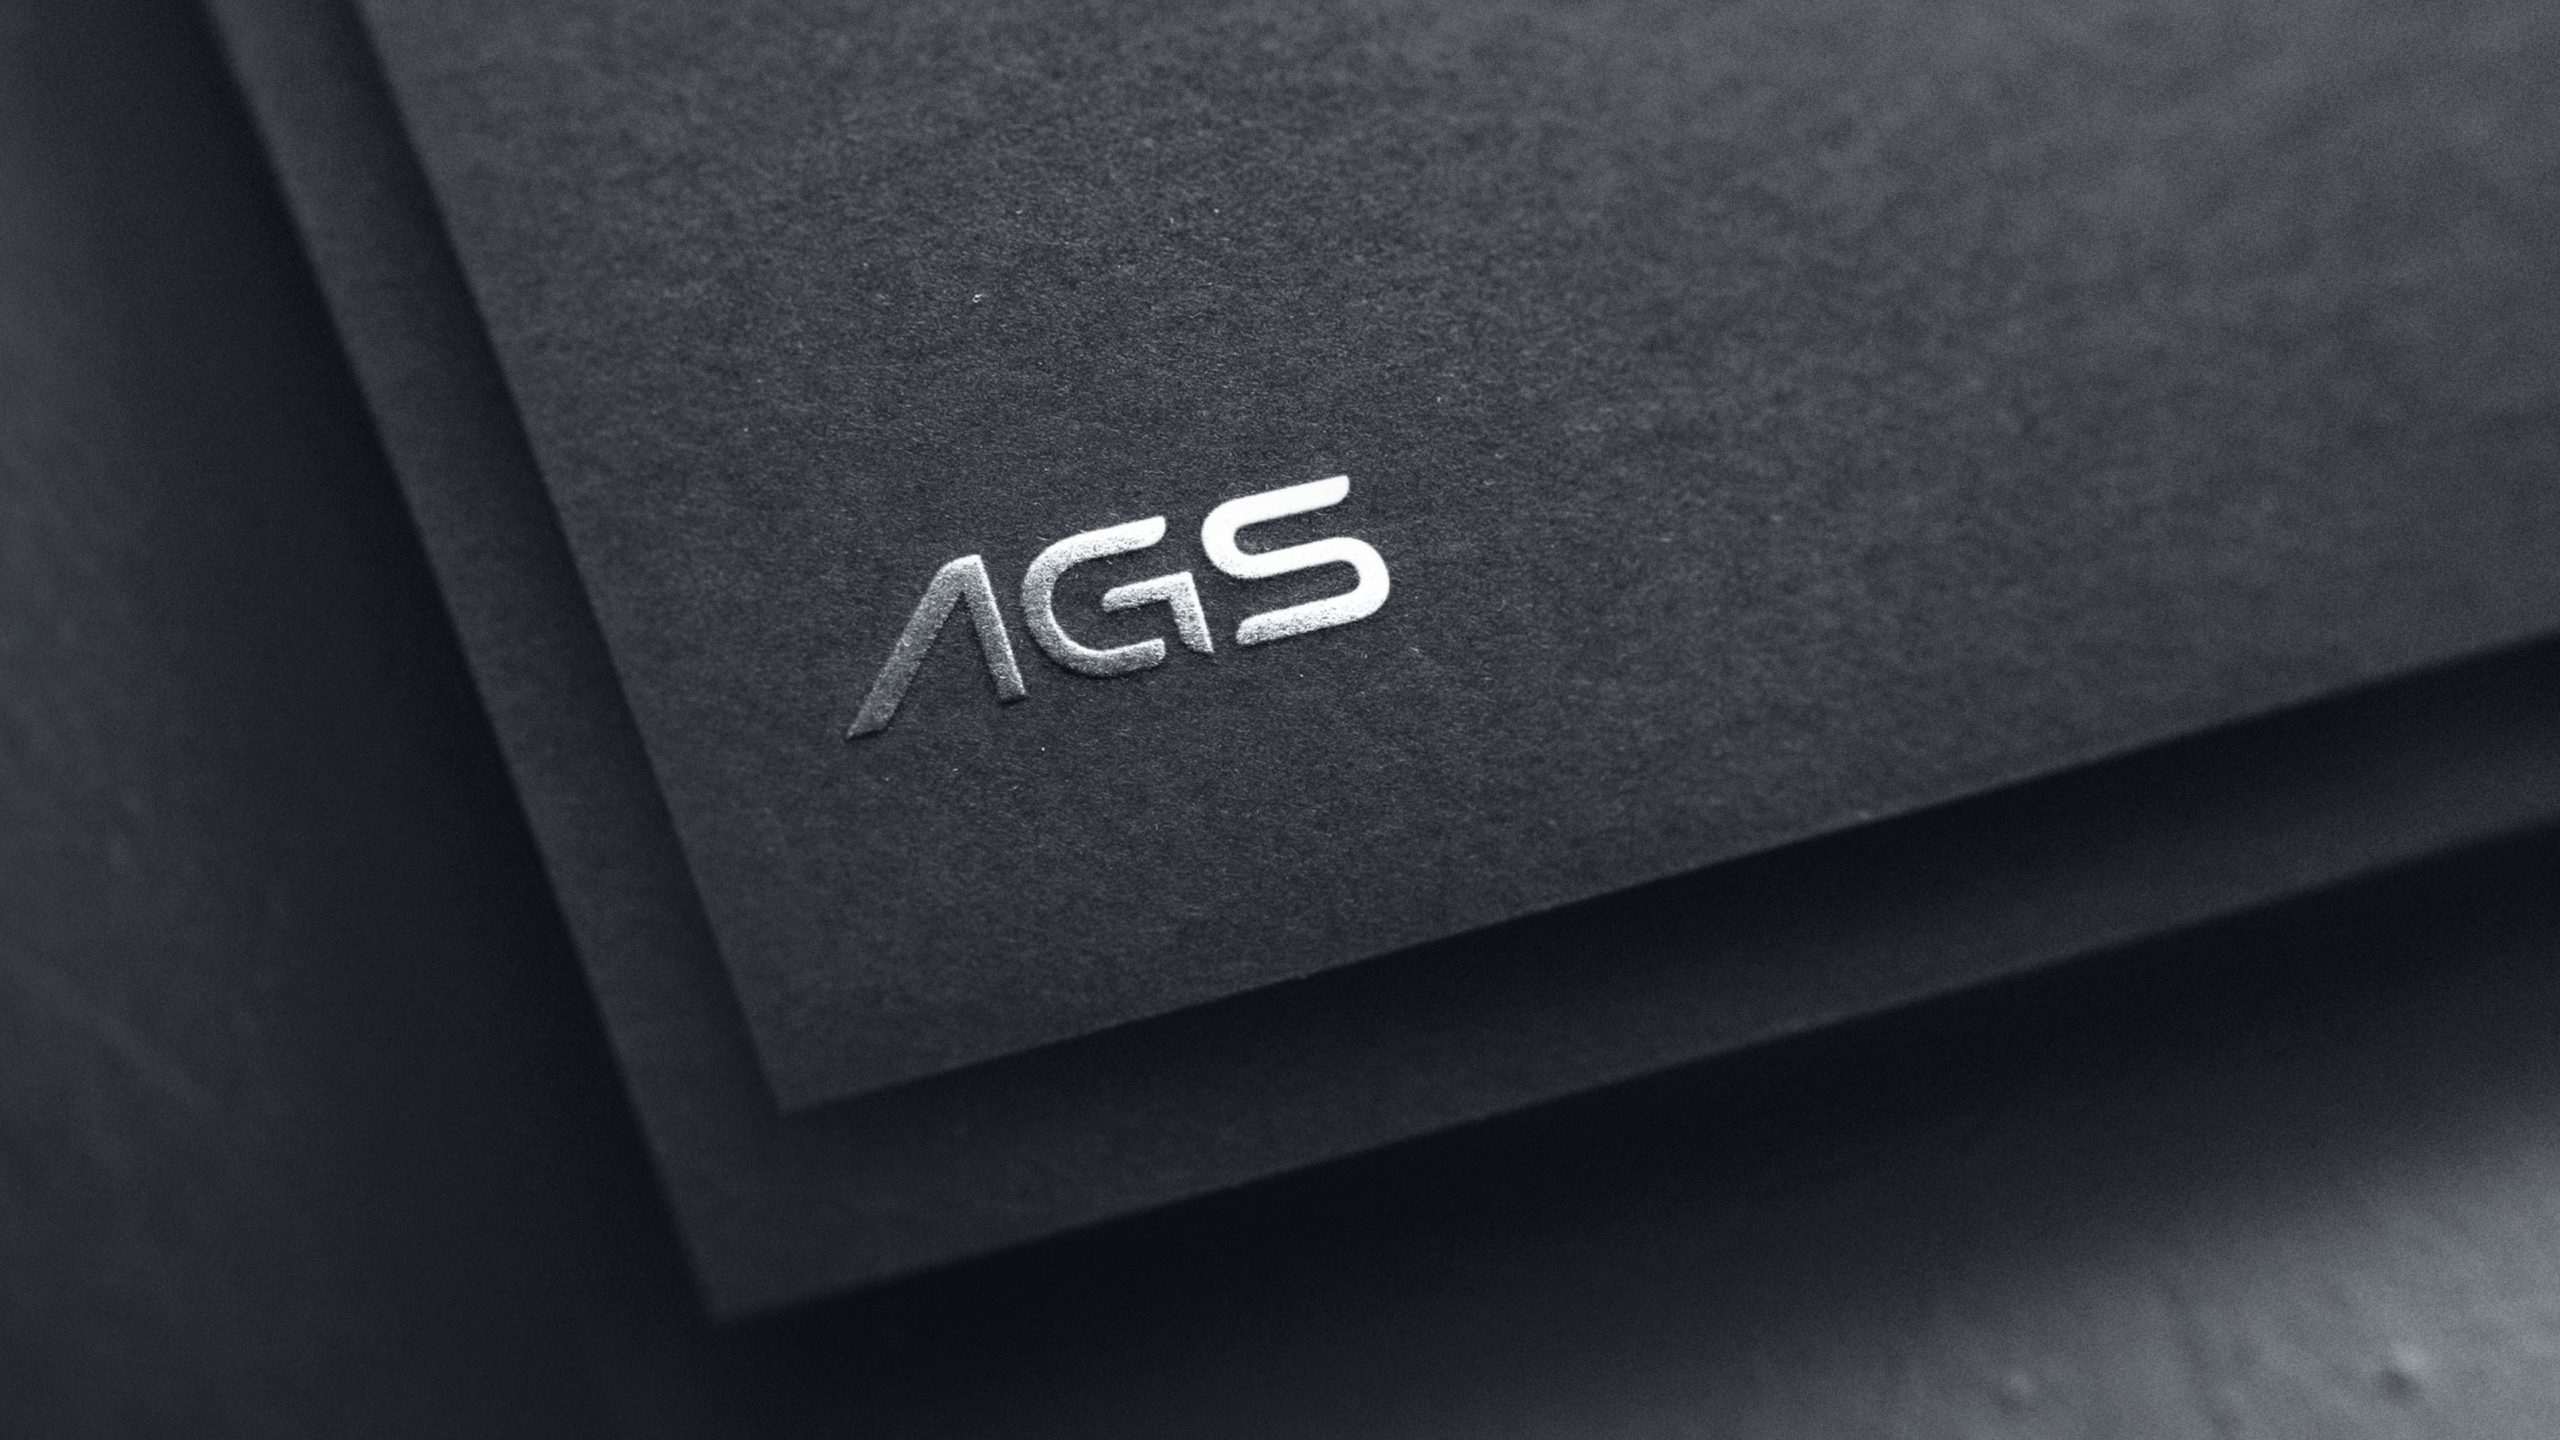 AGS - Aluminium Glass Steel